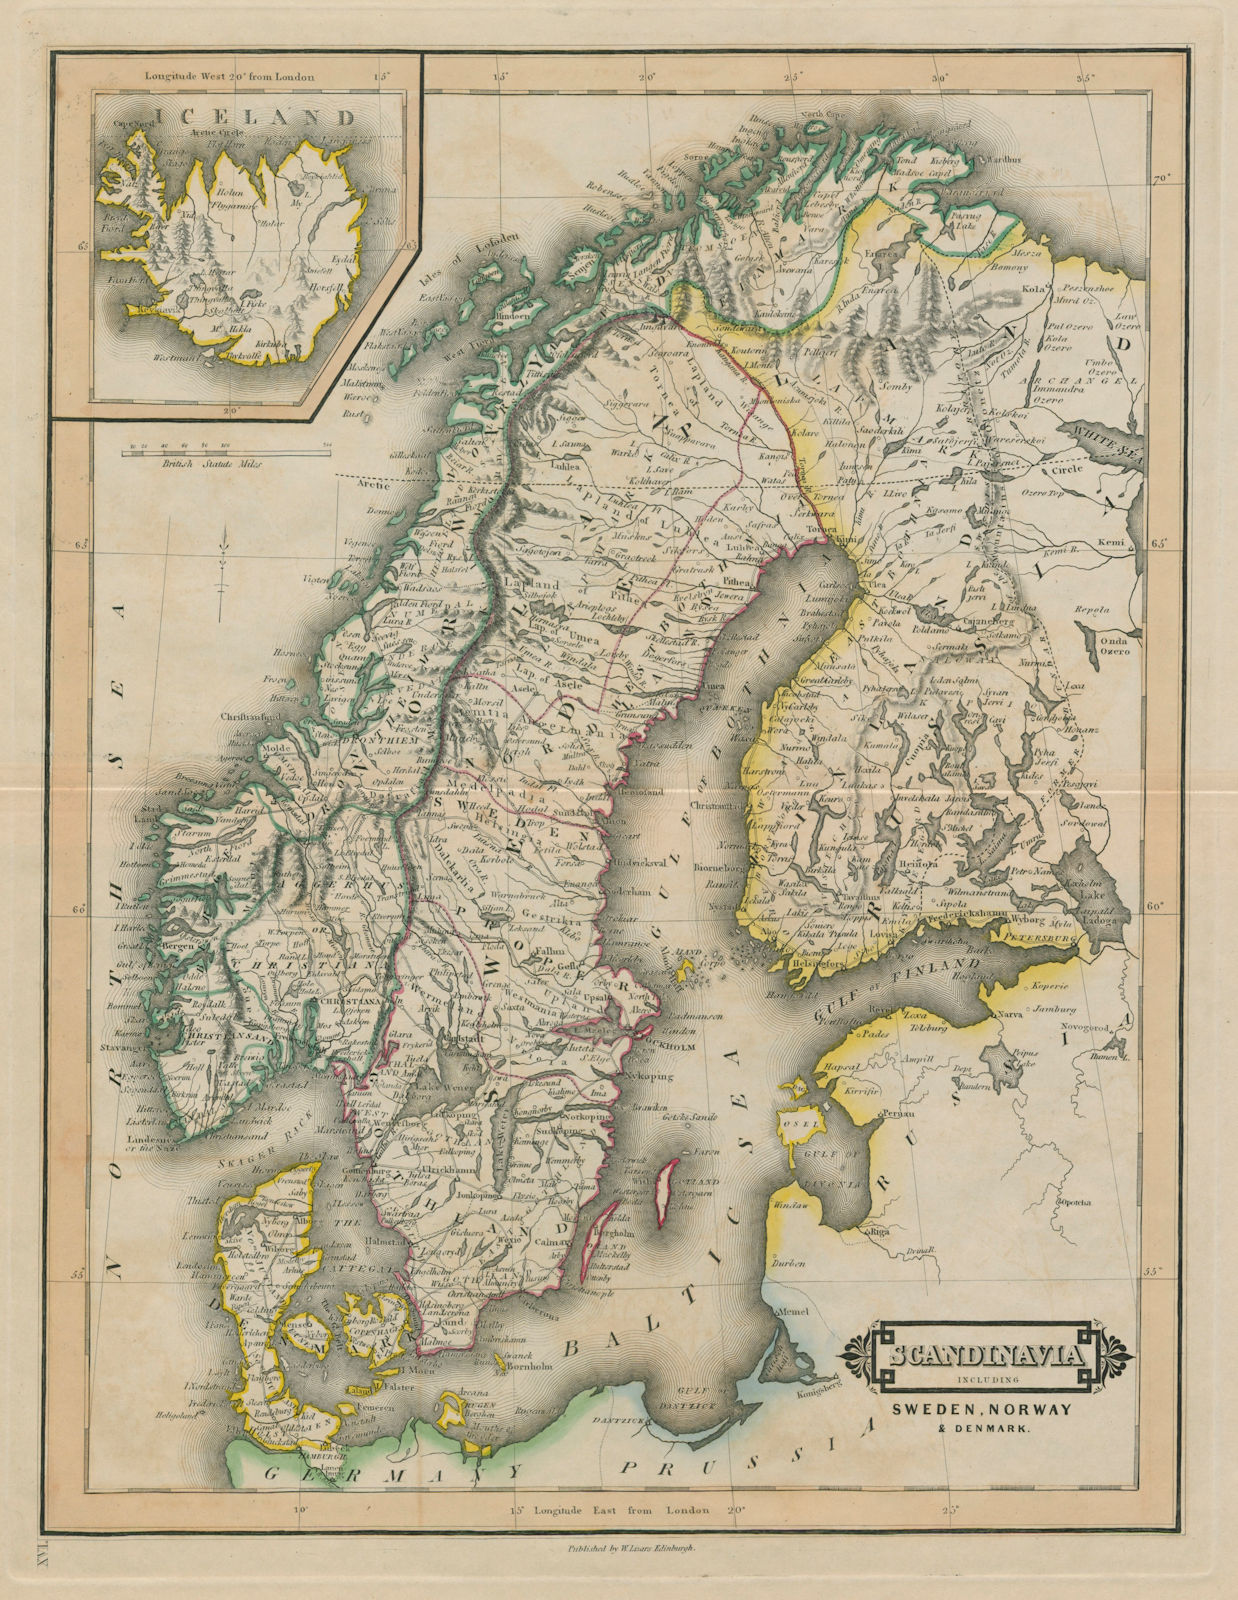 Associate Product Scandinavia including Sweden, Norway & Denmark. Iceland. LIZARS 1842 old map